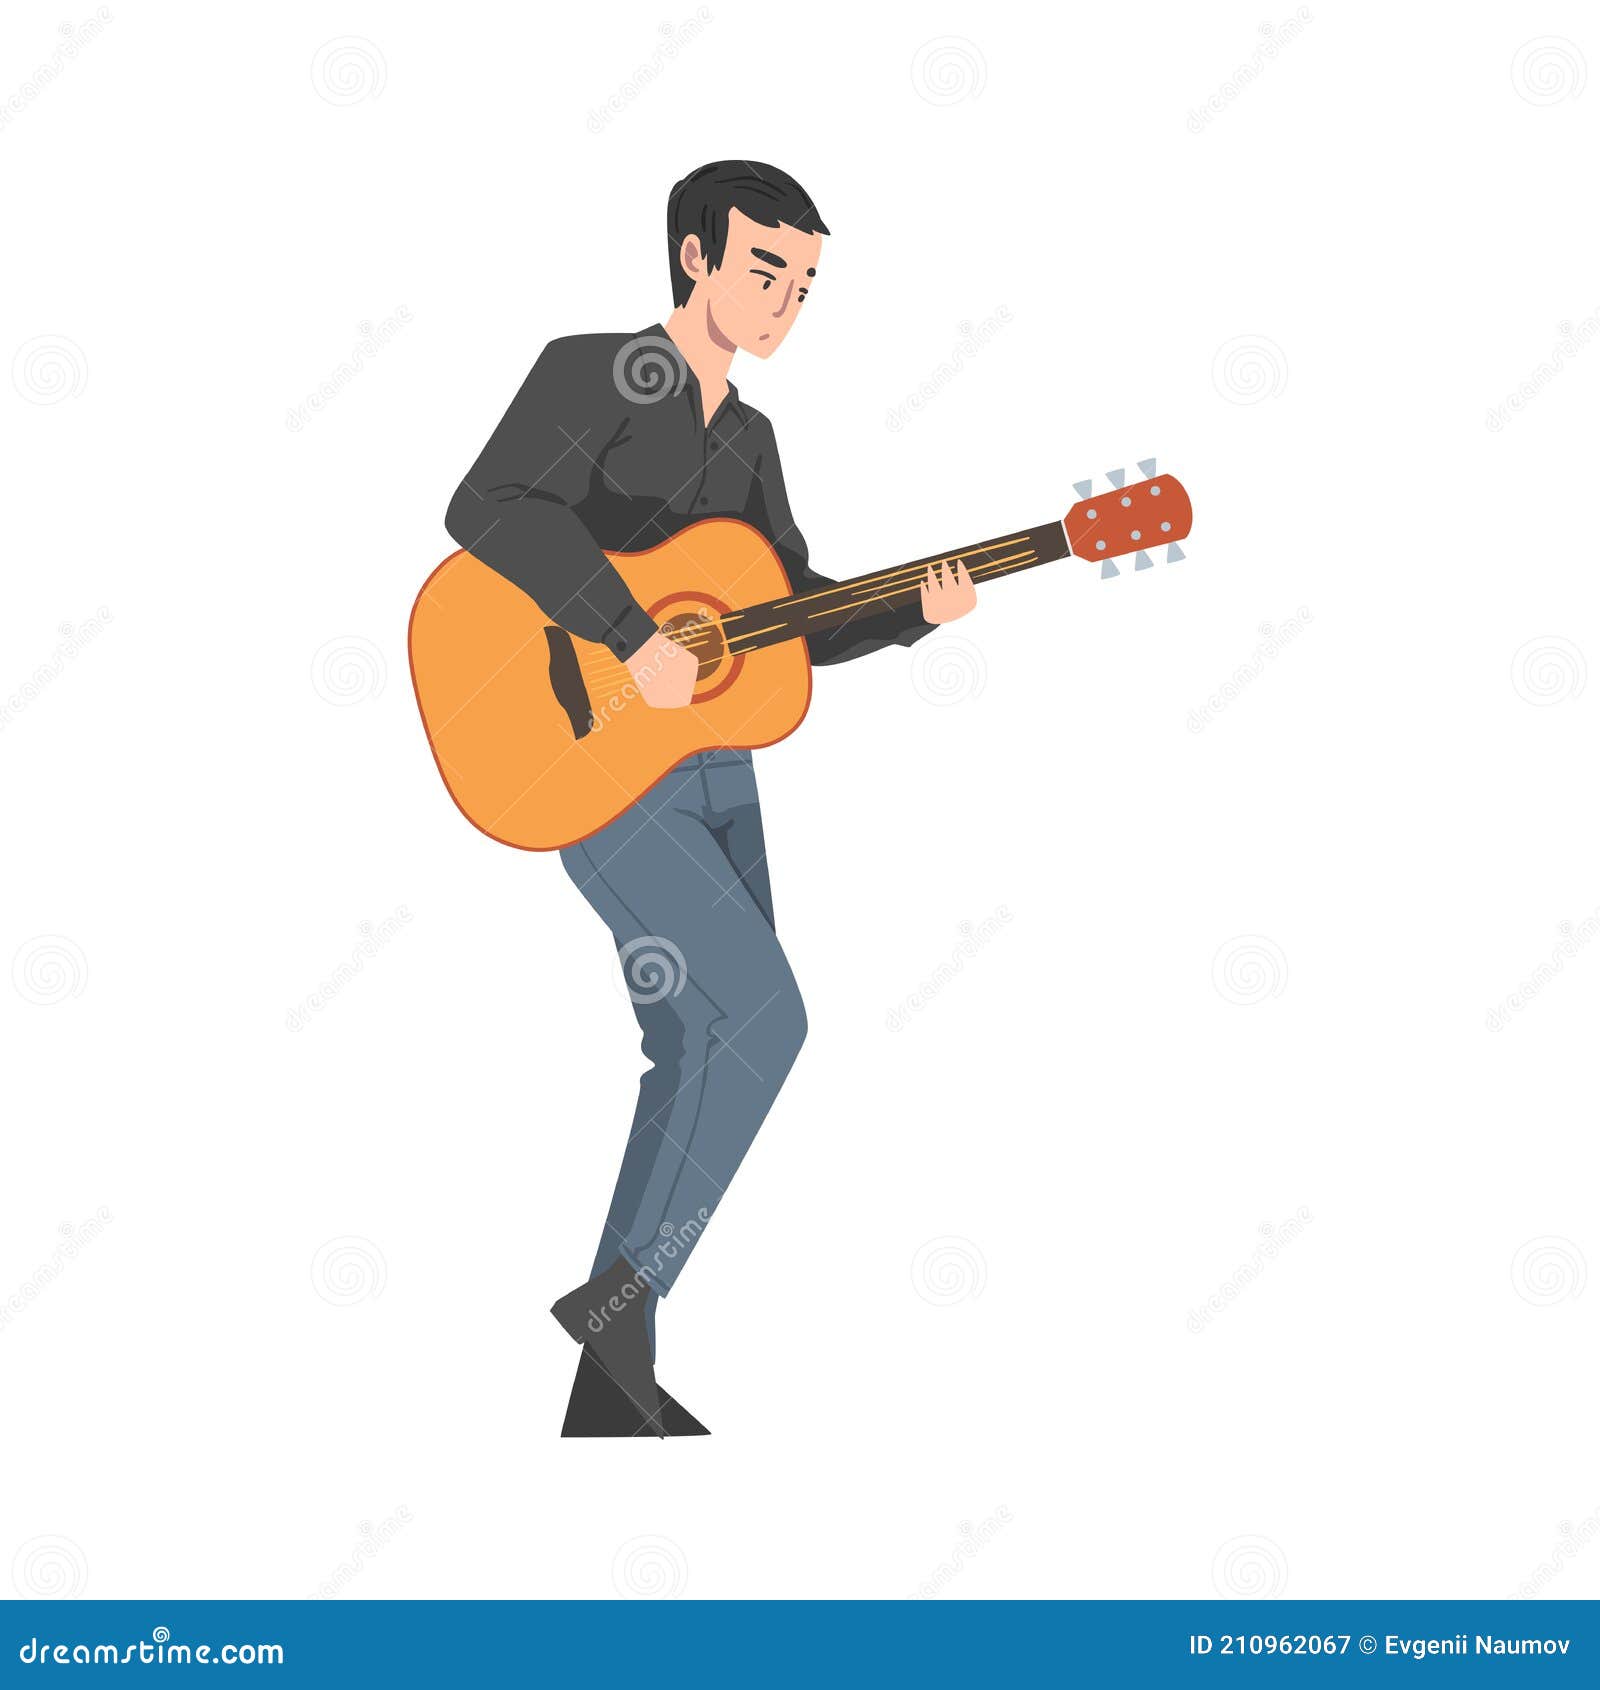 Man Playing Acoustic Guitar, Guy Musician Guitarist Character Performing at  Concert Cartoon Style Vector Illustration Stock Vector - Illustration of  hobby, artist: 210962067